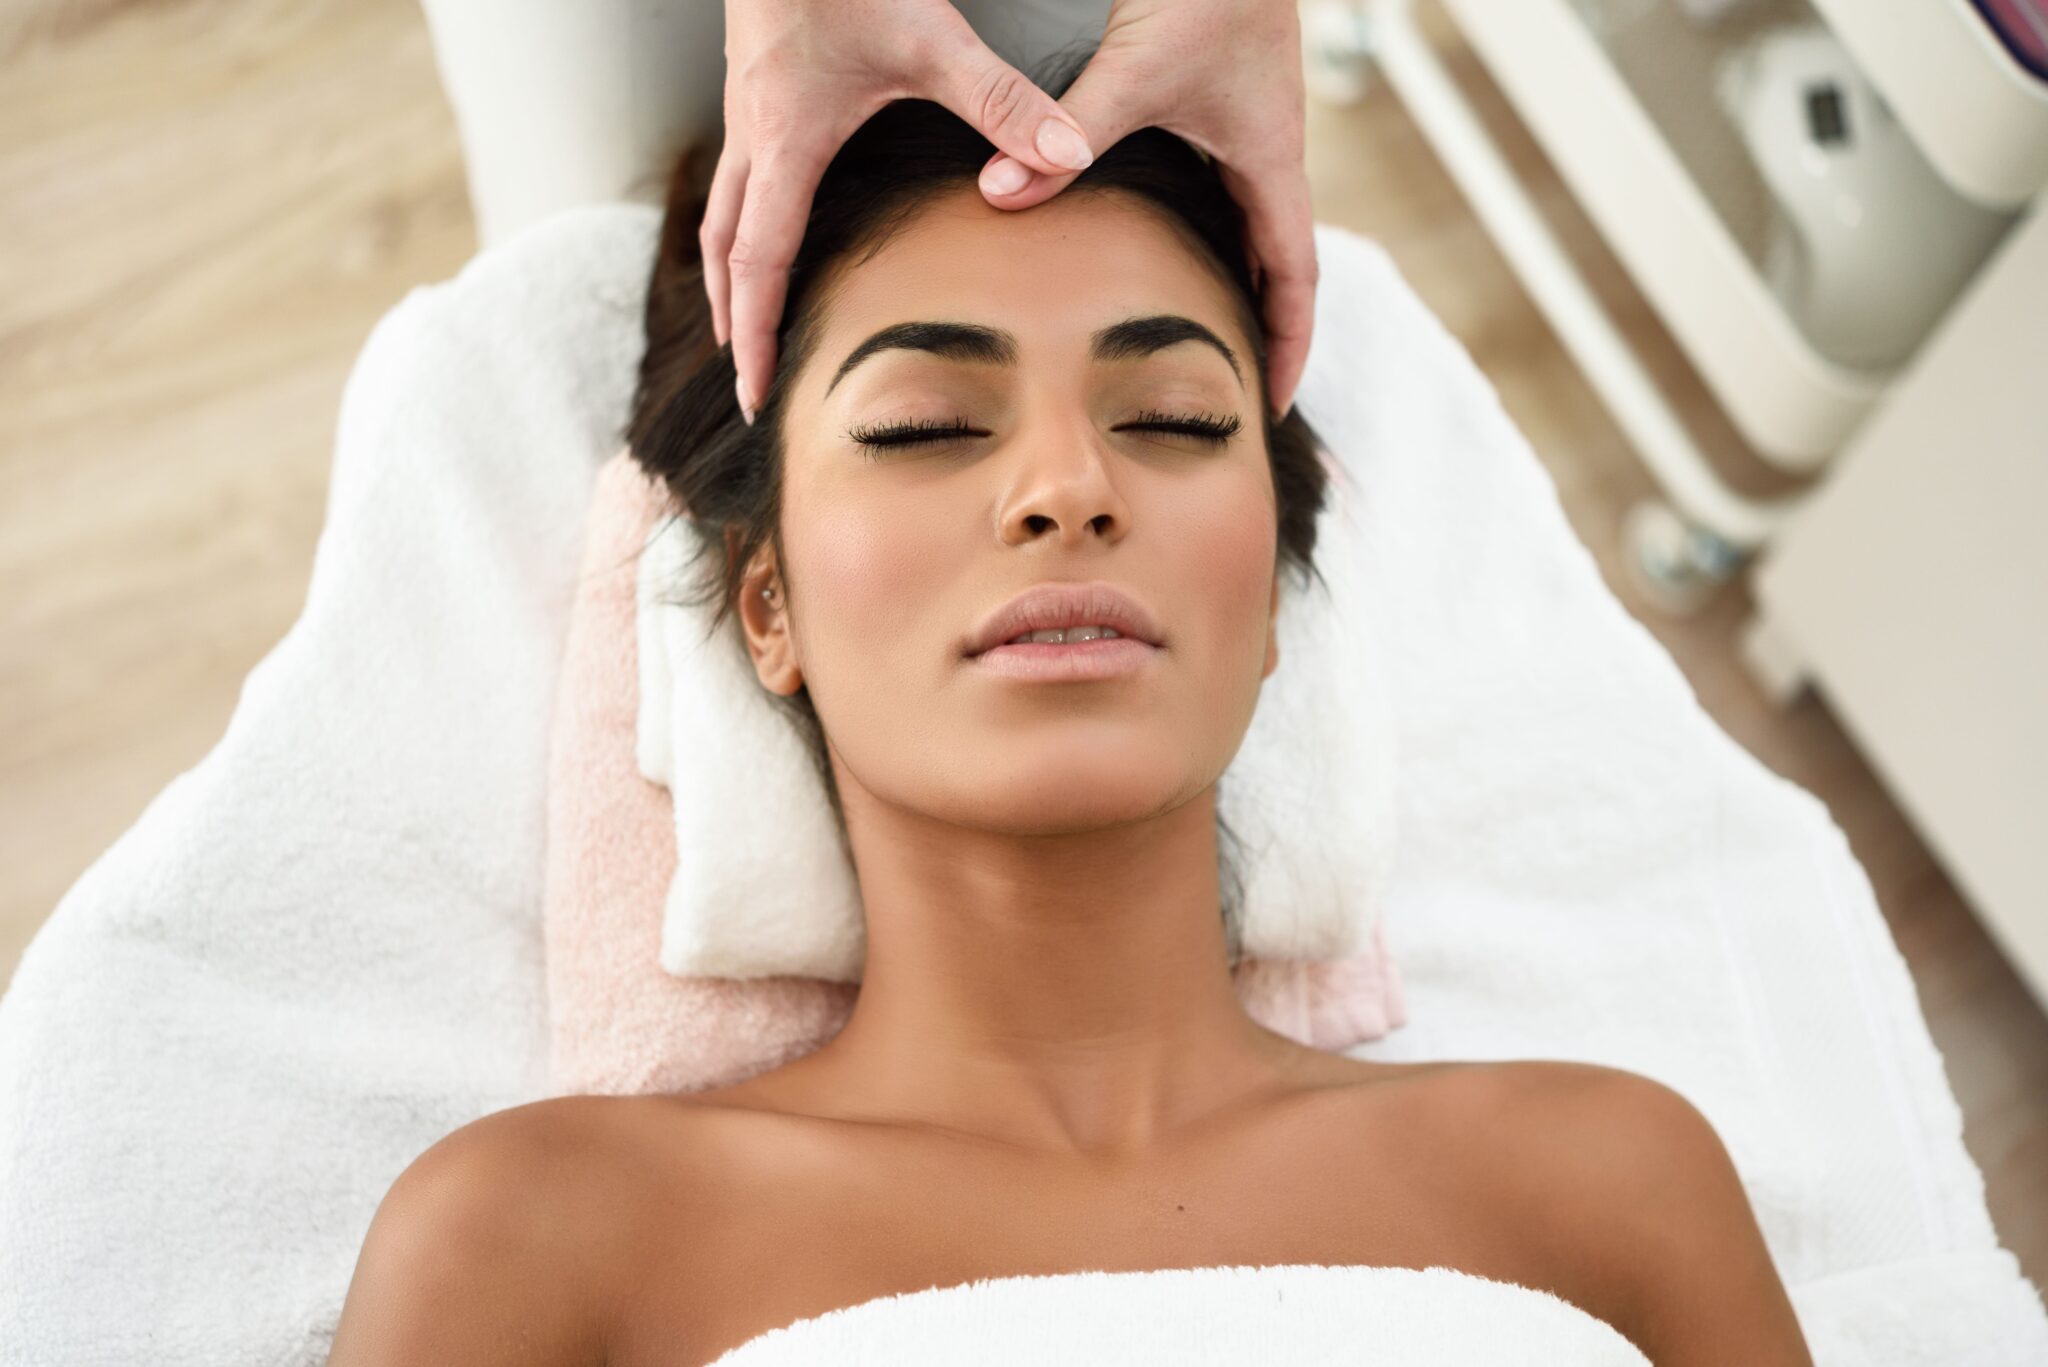 Facial Massages For Better Skin